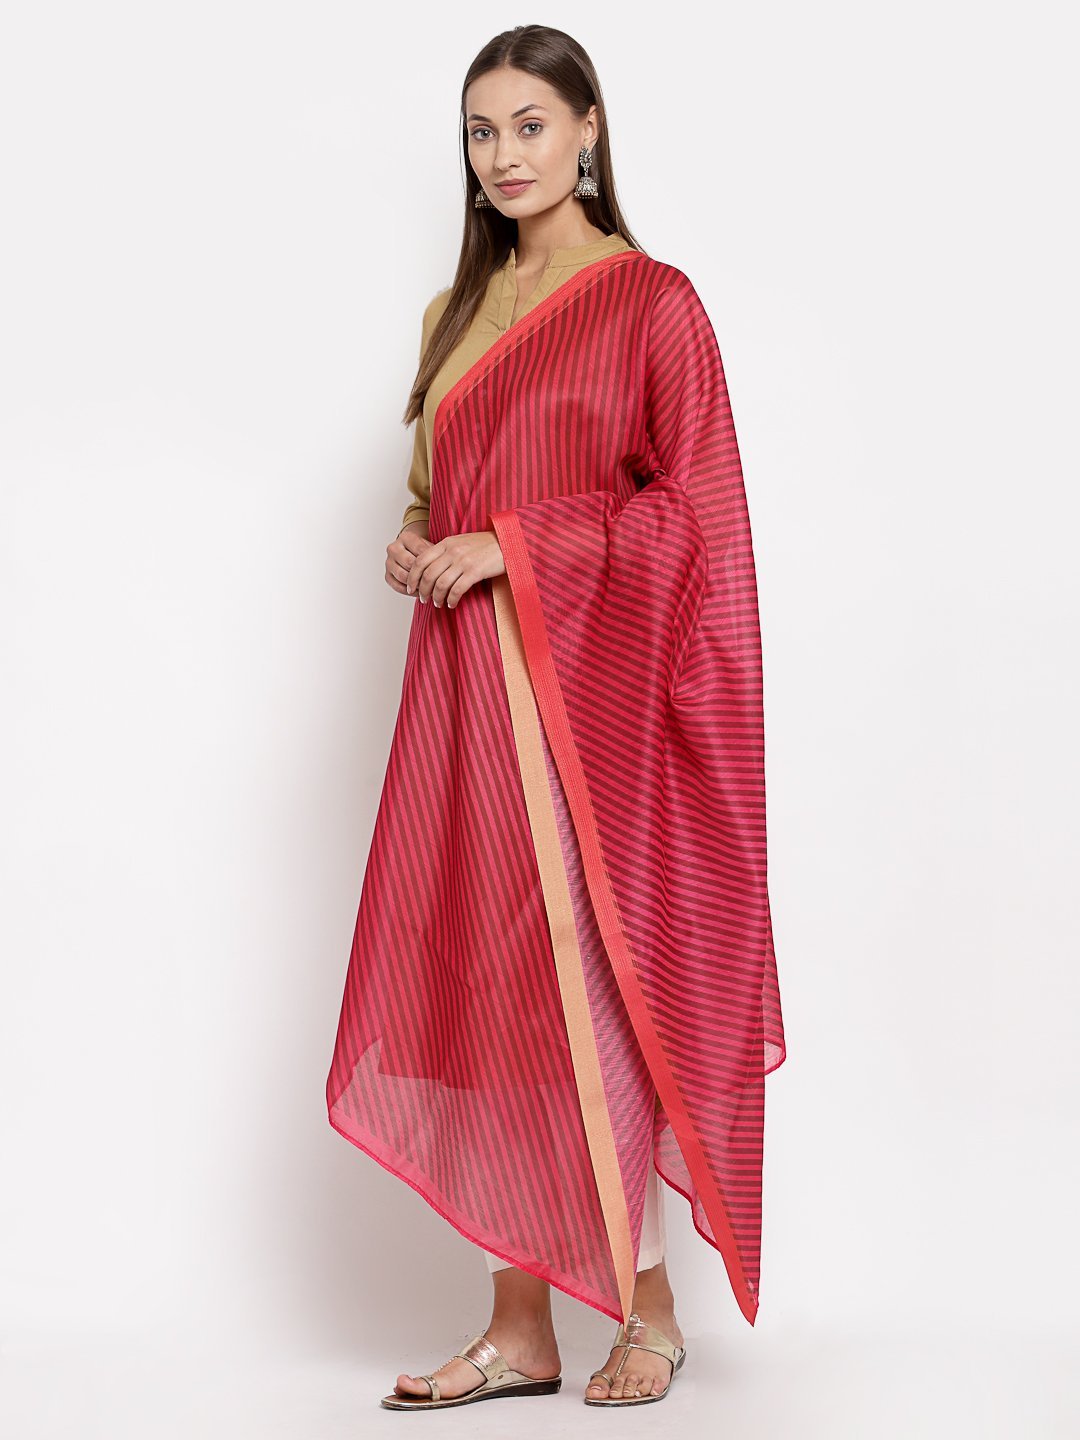 Women's Red Cotton Solid Casual Dupatta - Myshka